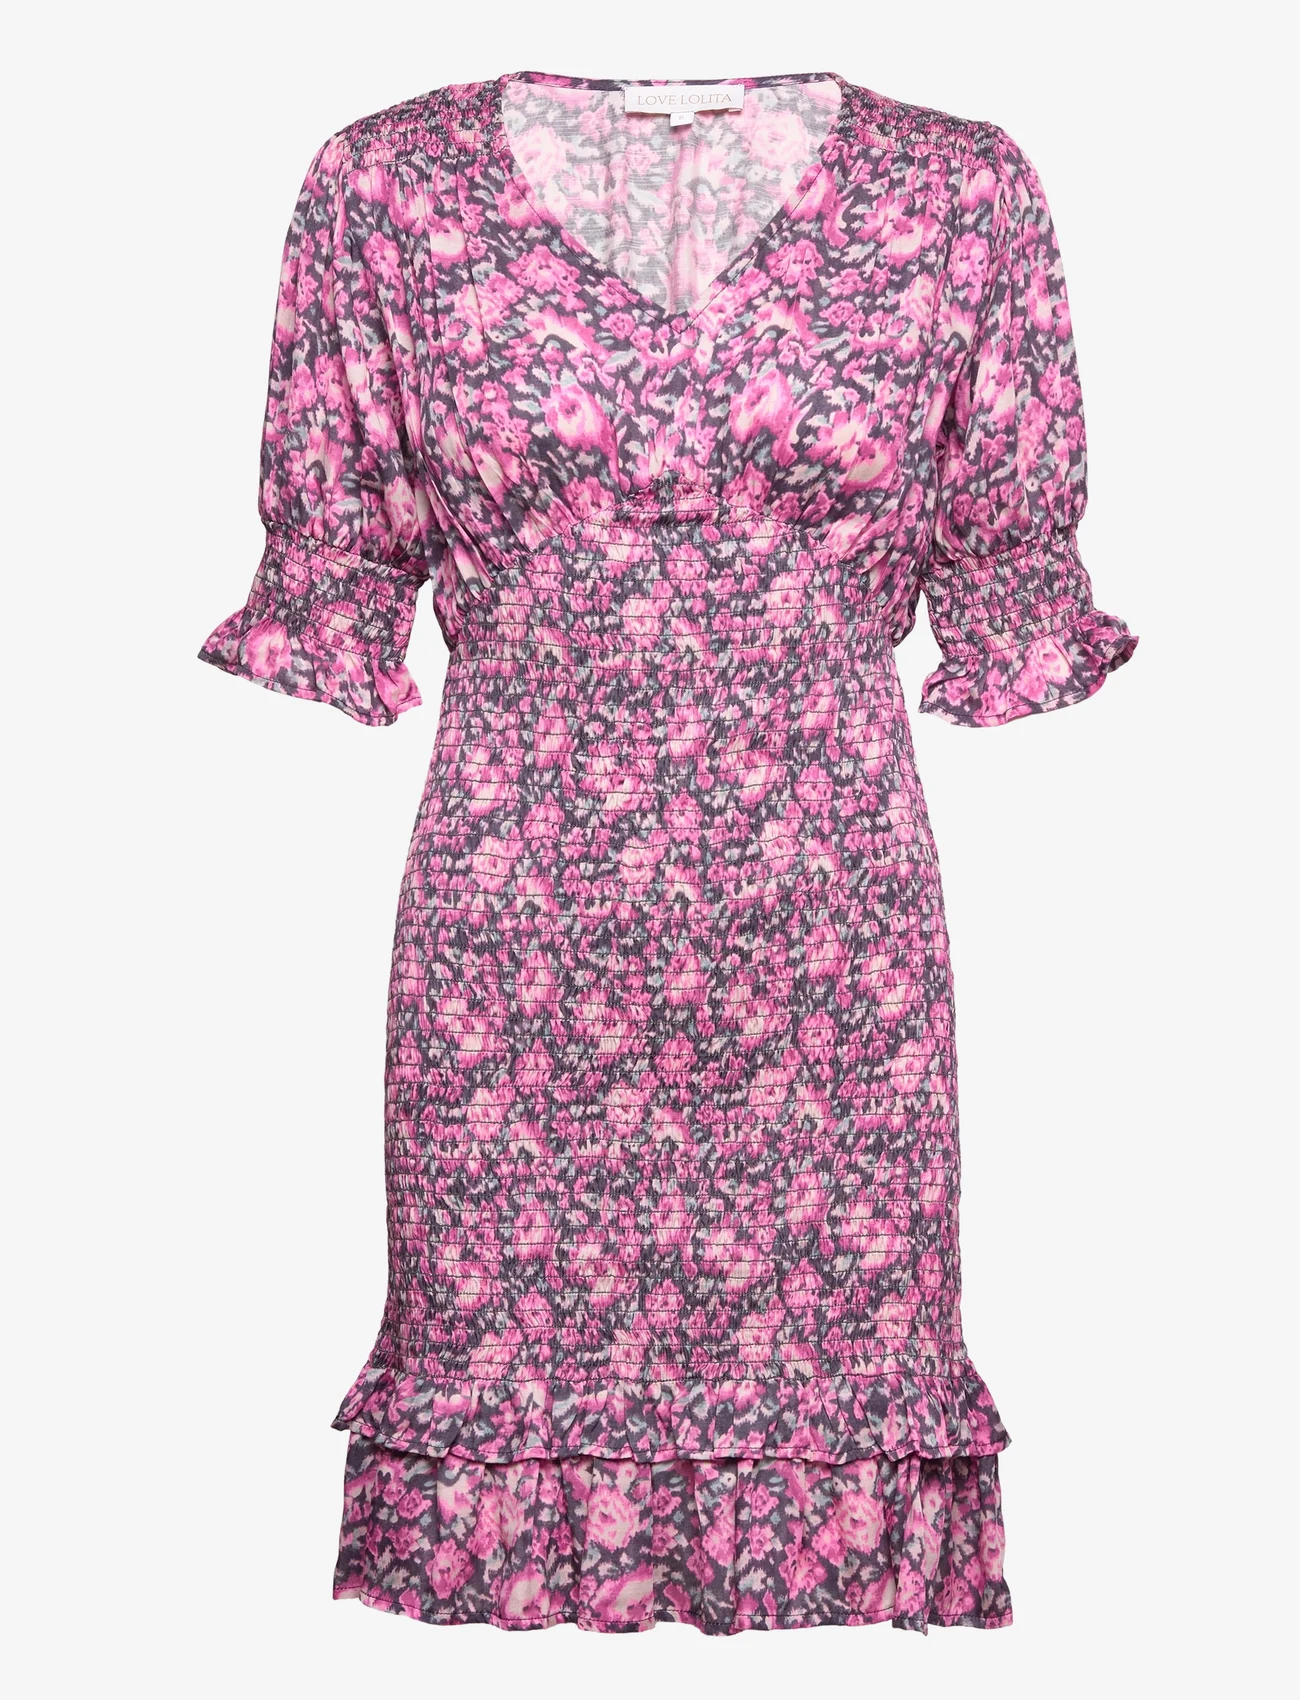 Love Lolita - Lorena dress - feestelijke kleding voor outlet-prijzen - vintage rose - 0